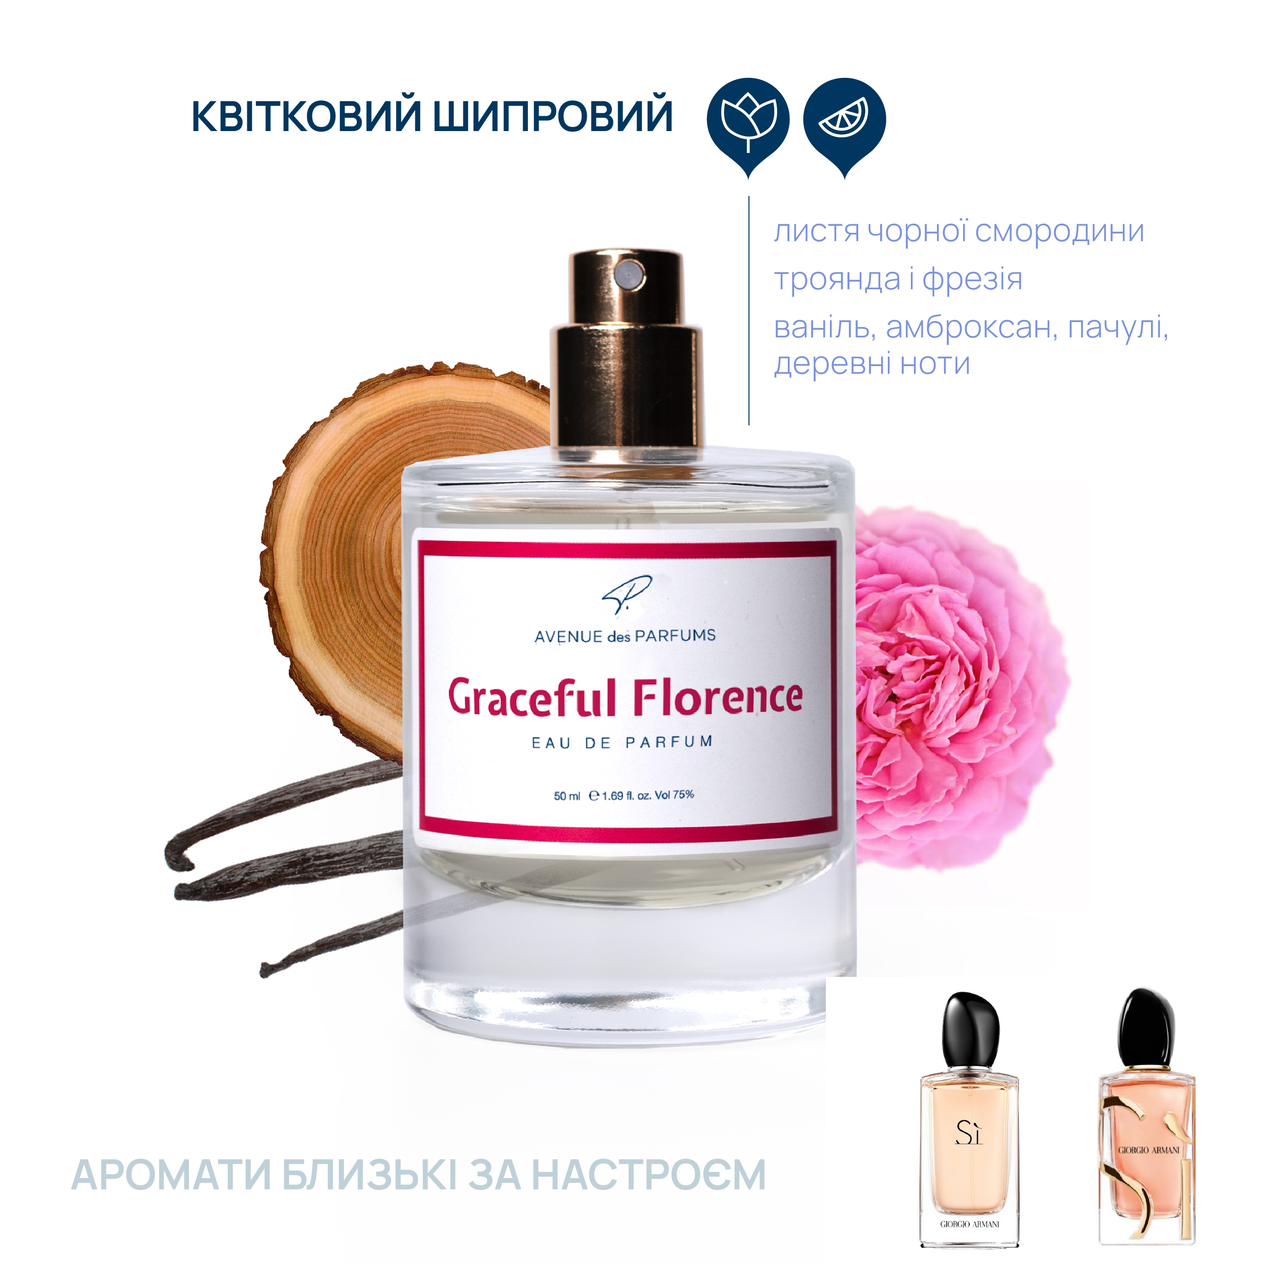 Духи парфюм Graceful Florence ( Si) Приятный, сладкий аромат AVENUE des PARFUMS парфюм ALL 23